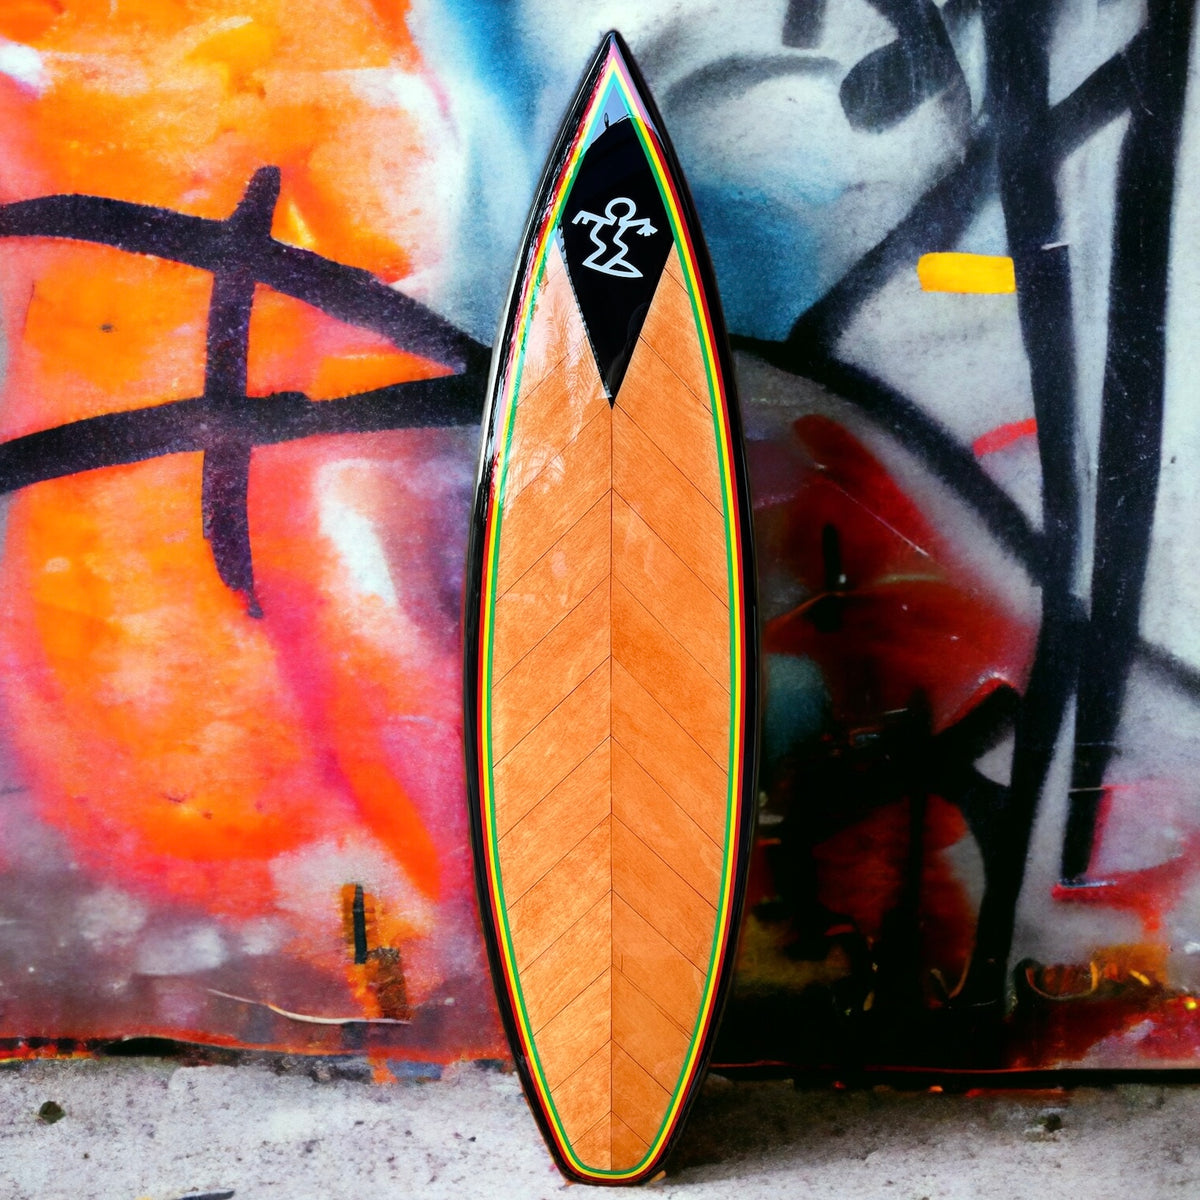 Wooden Decorative Surfboard Art for Wall Decor